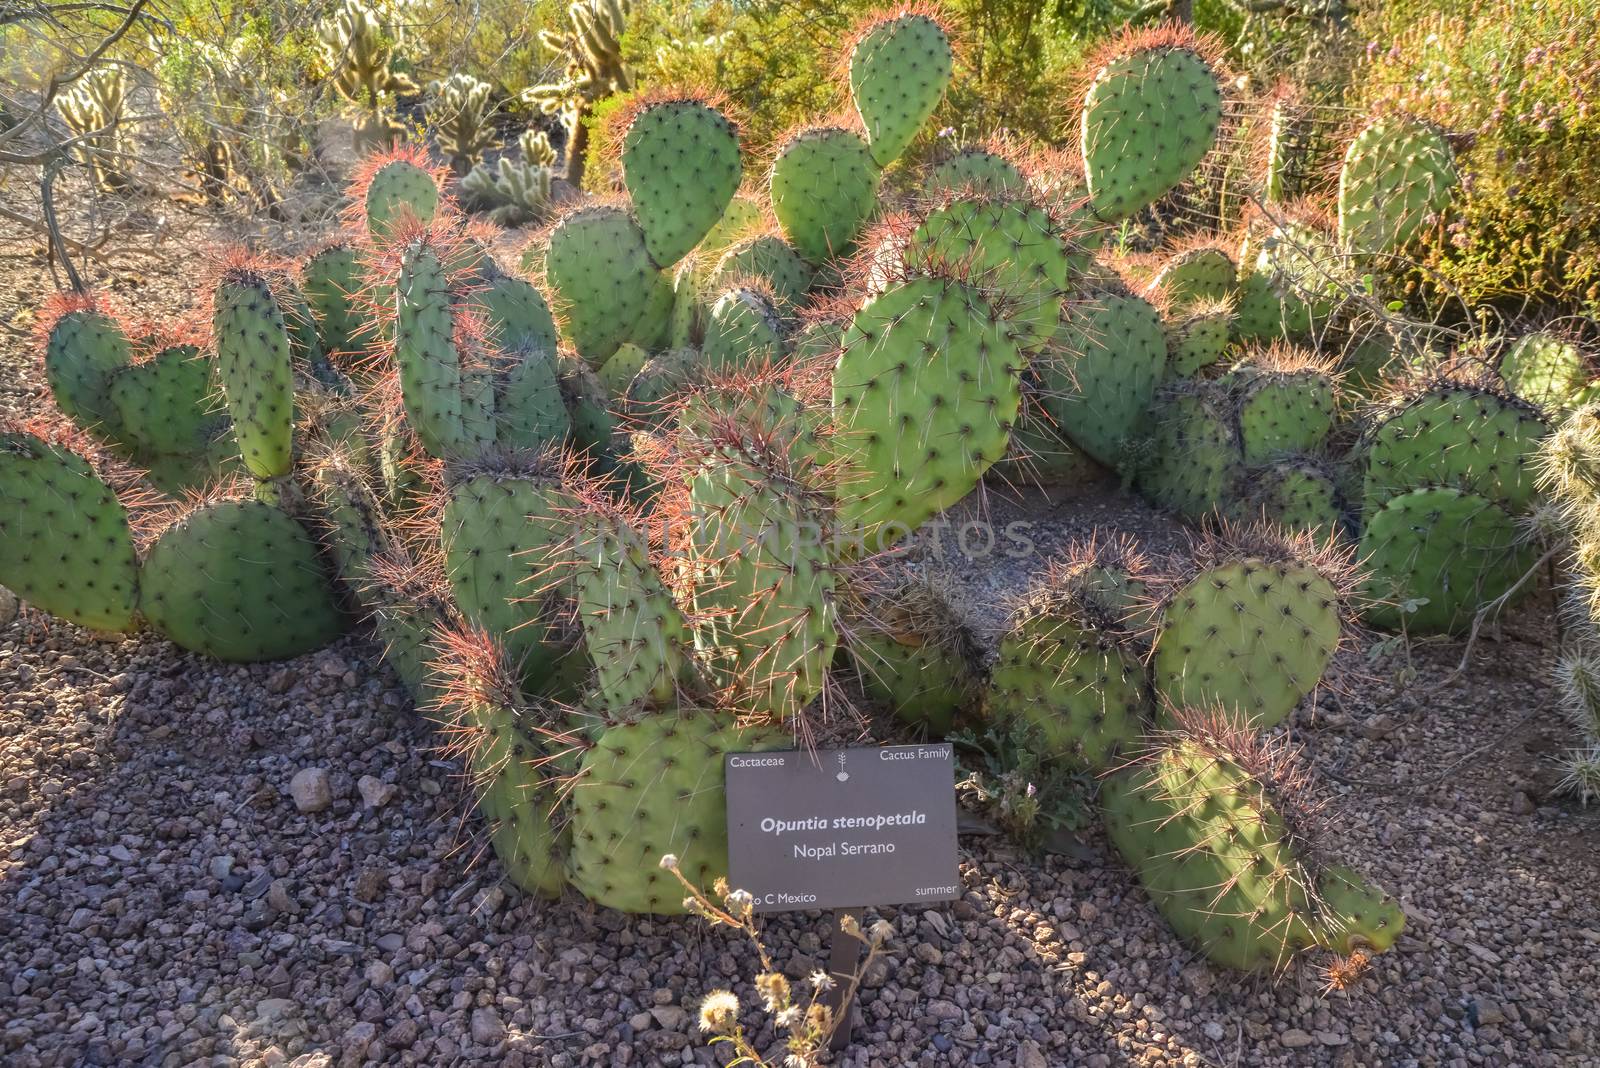 Cactus nameplate, nopal Serrano (Opuntia stenopetala) by Hydrobiolog